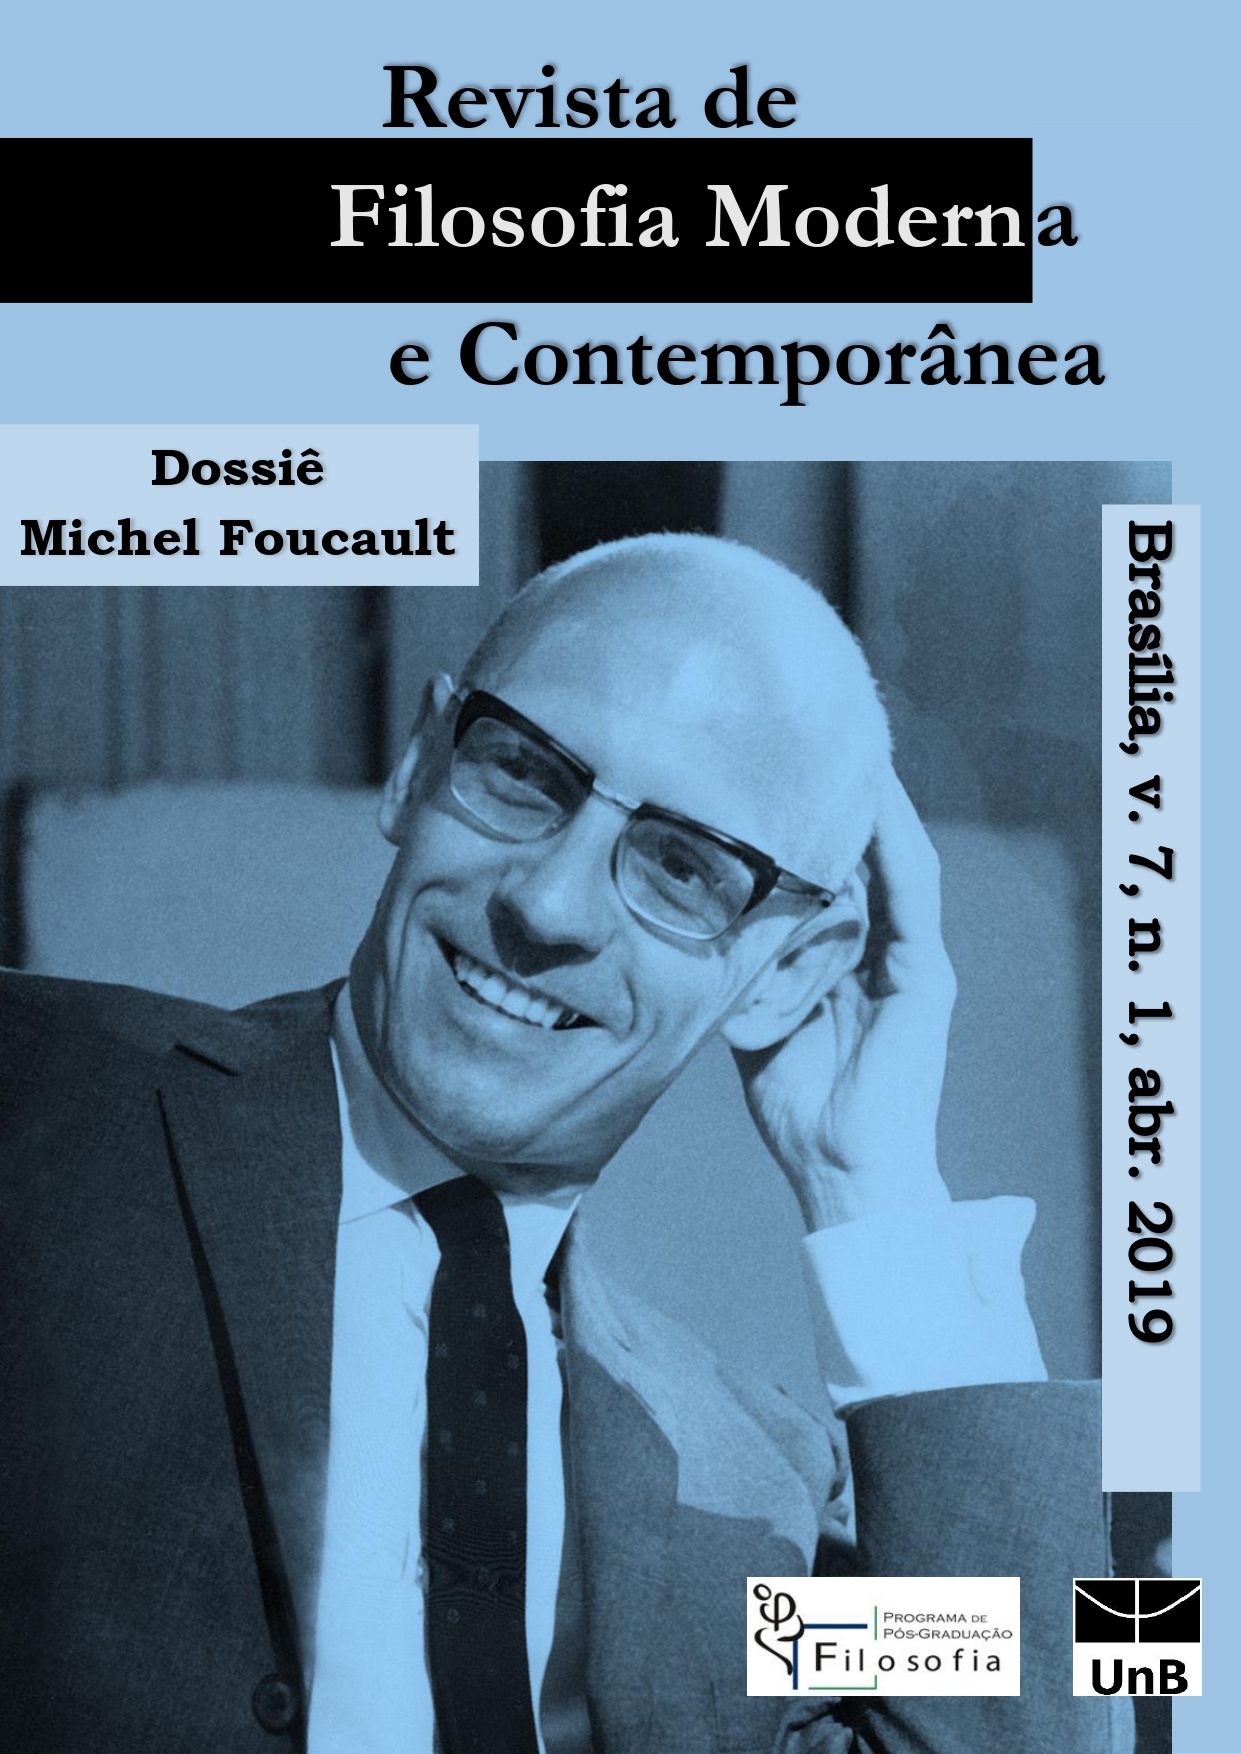 					Visualizar v. 7 n. 1 (2019): Dossiê "Michel Foucault"
				